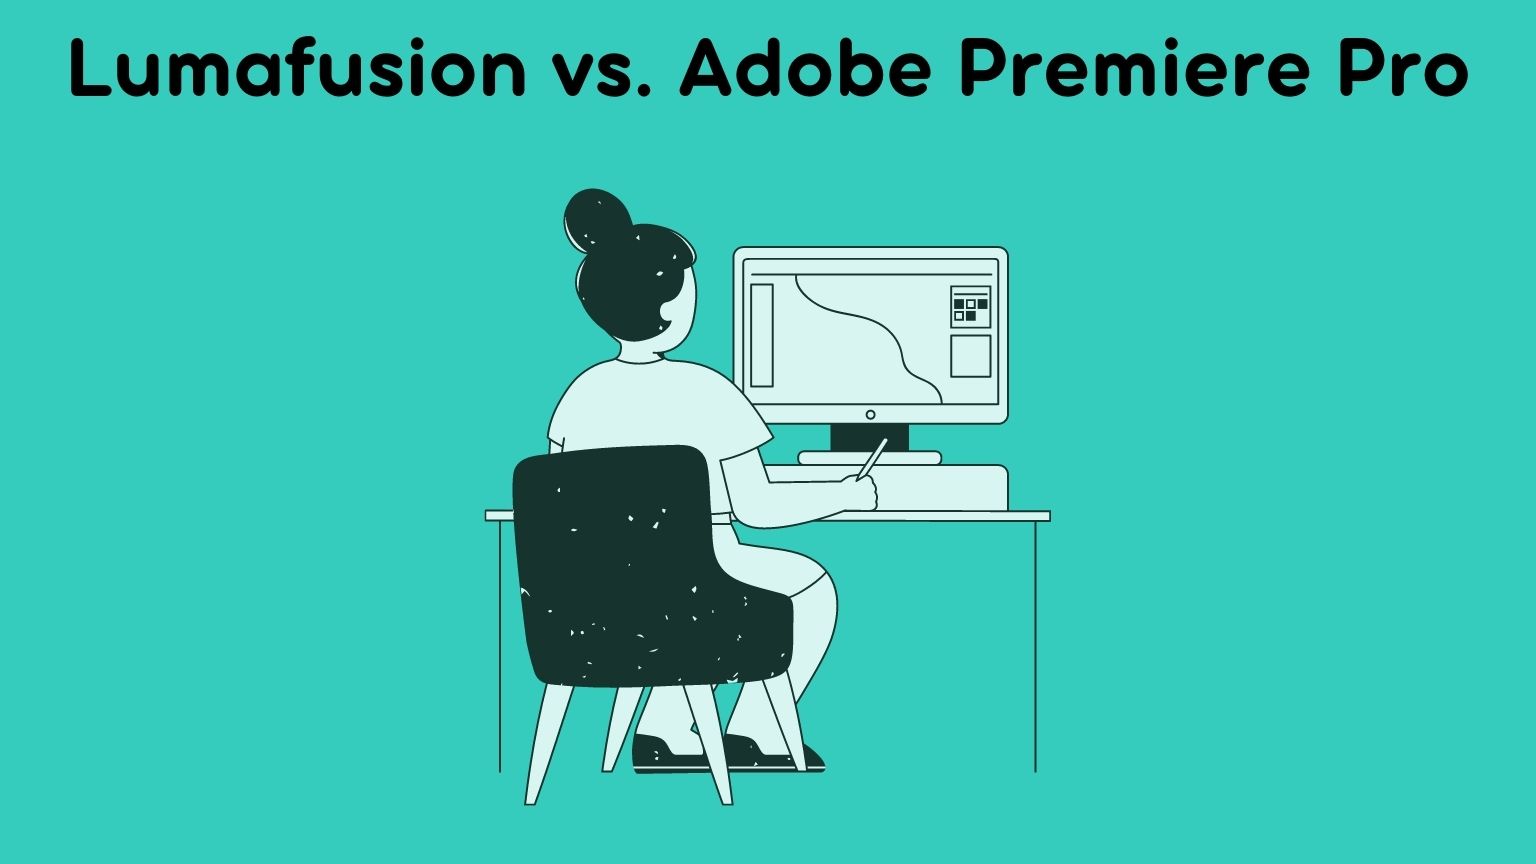 Lumafusion vs. Adobe Premiere Pro: Which One is Best?